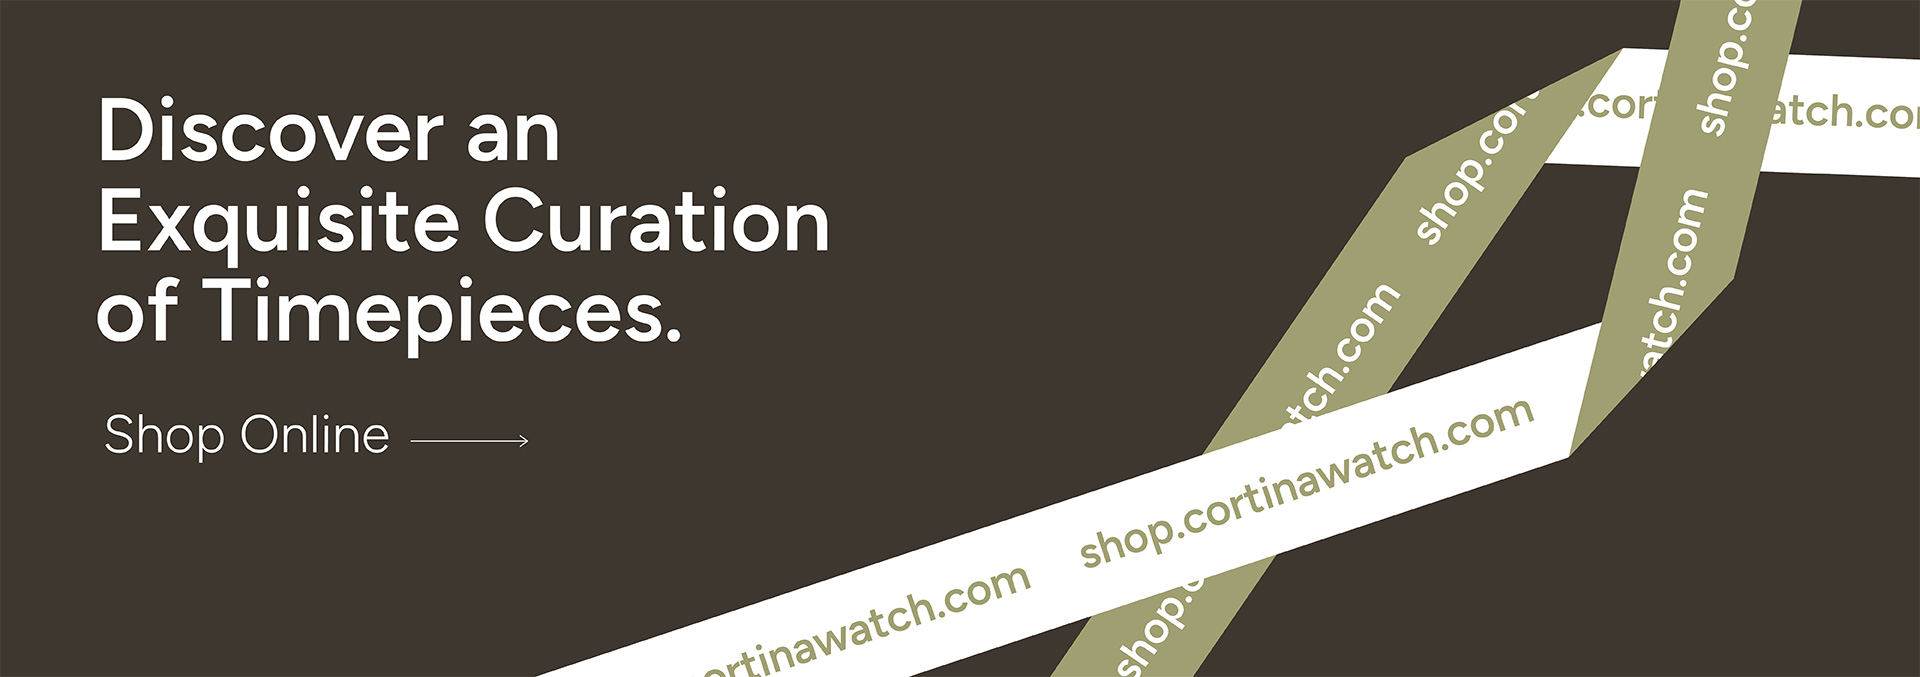 Cortina Watch Ecommerce Web Banner